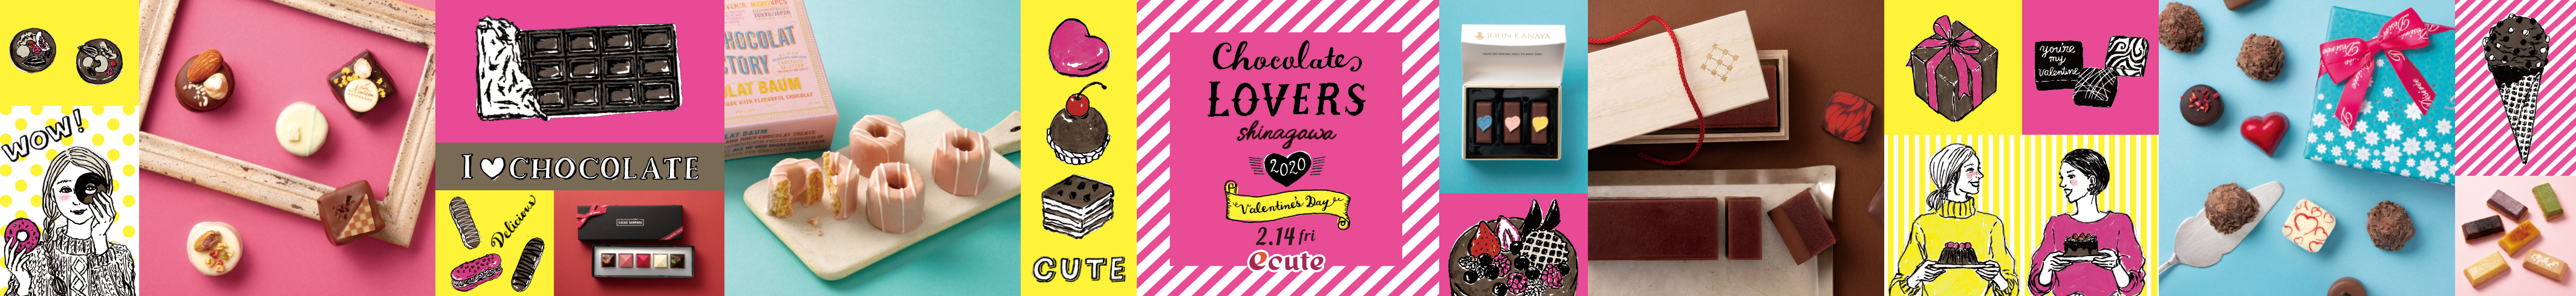 Chocolate LOVERS Shinagawa 2020